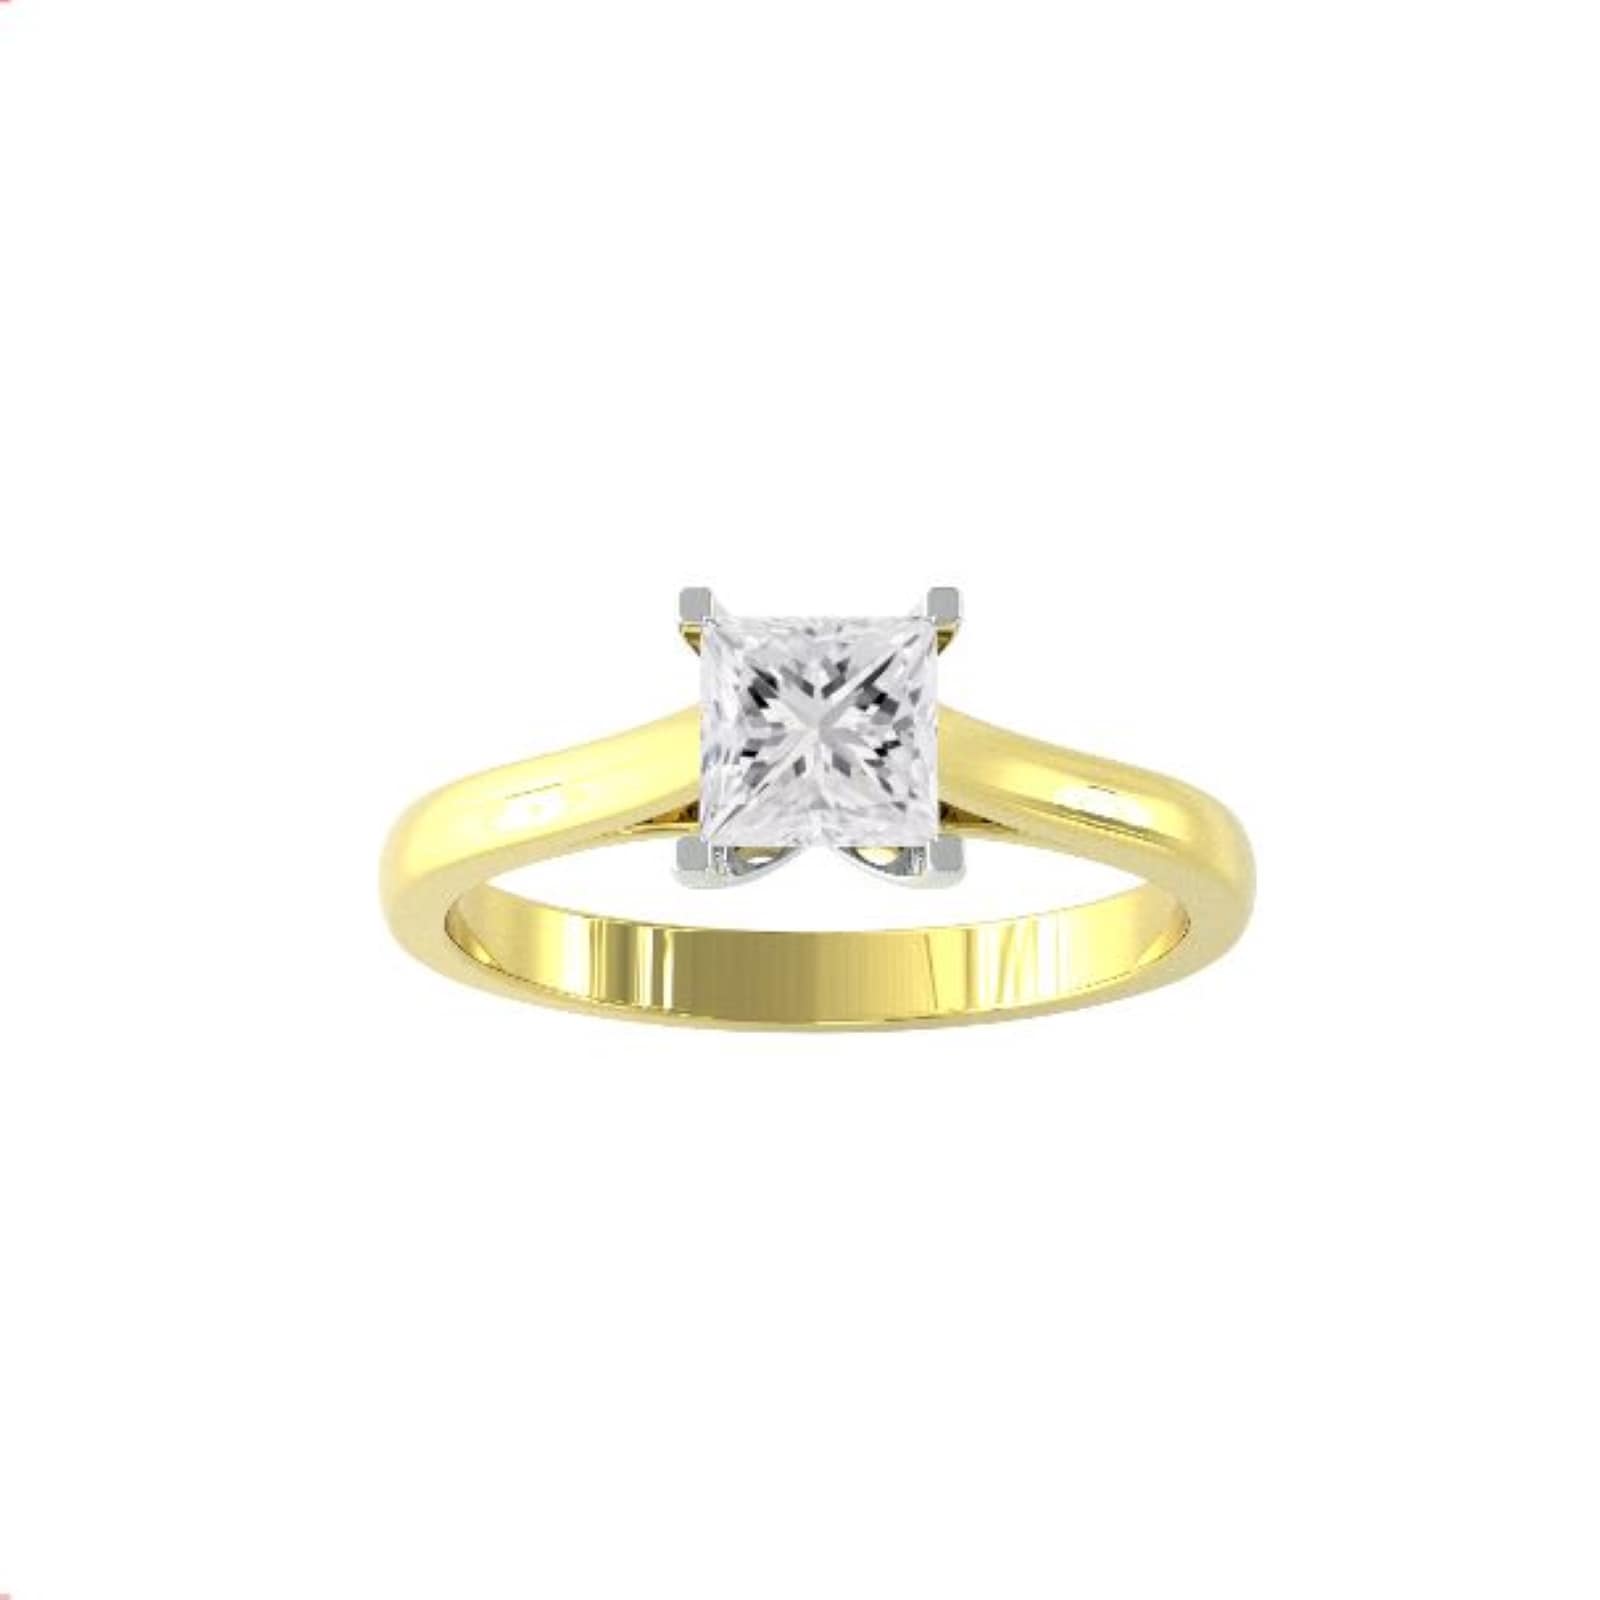 18ct Yellow Gold 0.75cttw Princess Cut Diamond Ring - Ring Size R.5